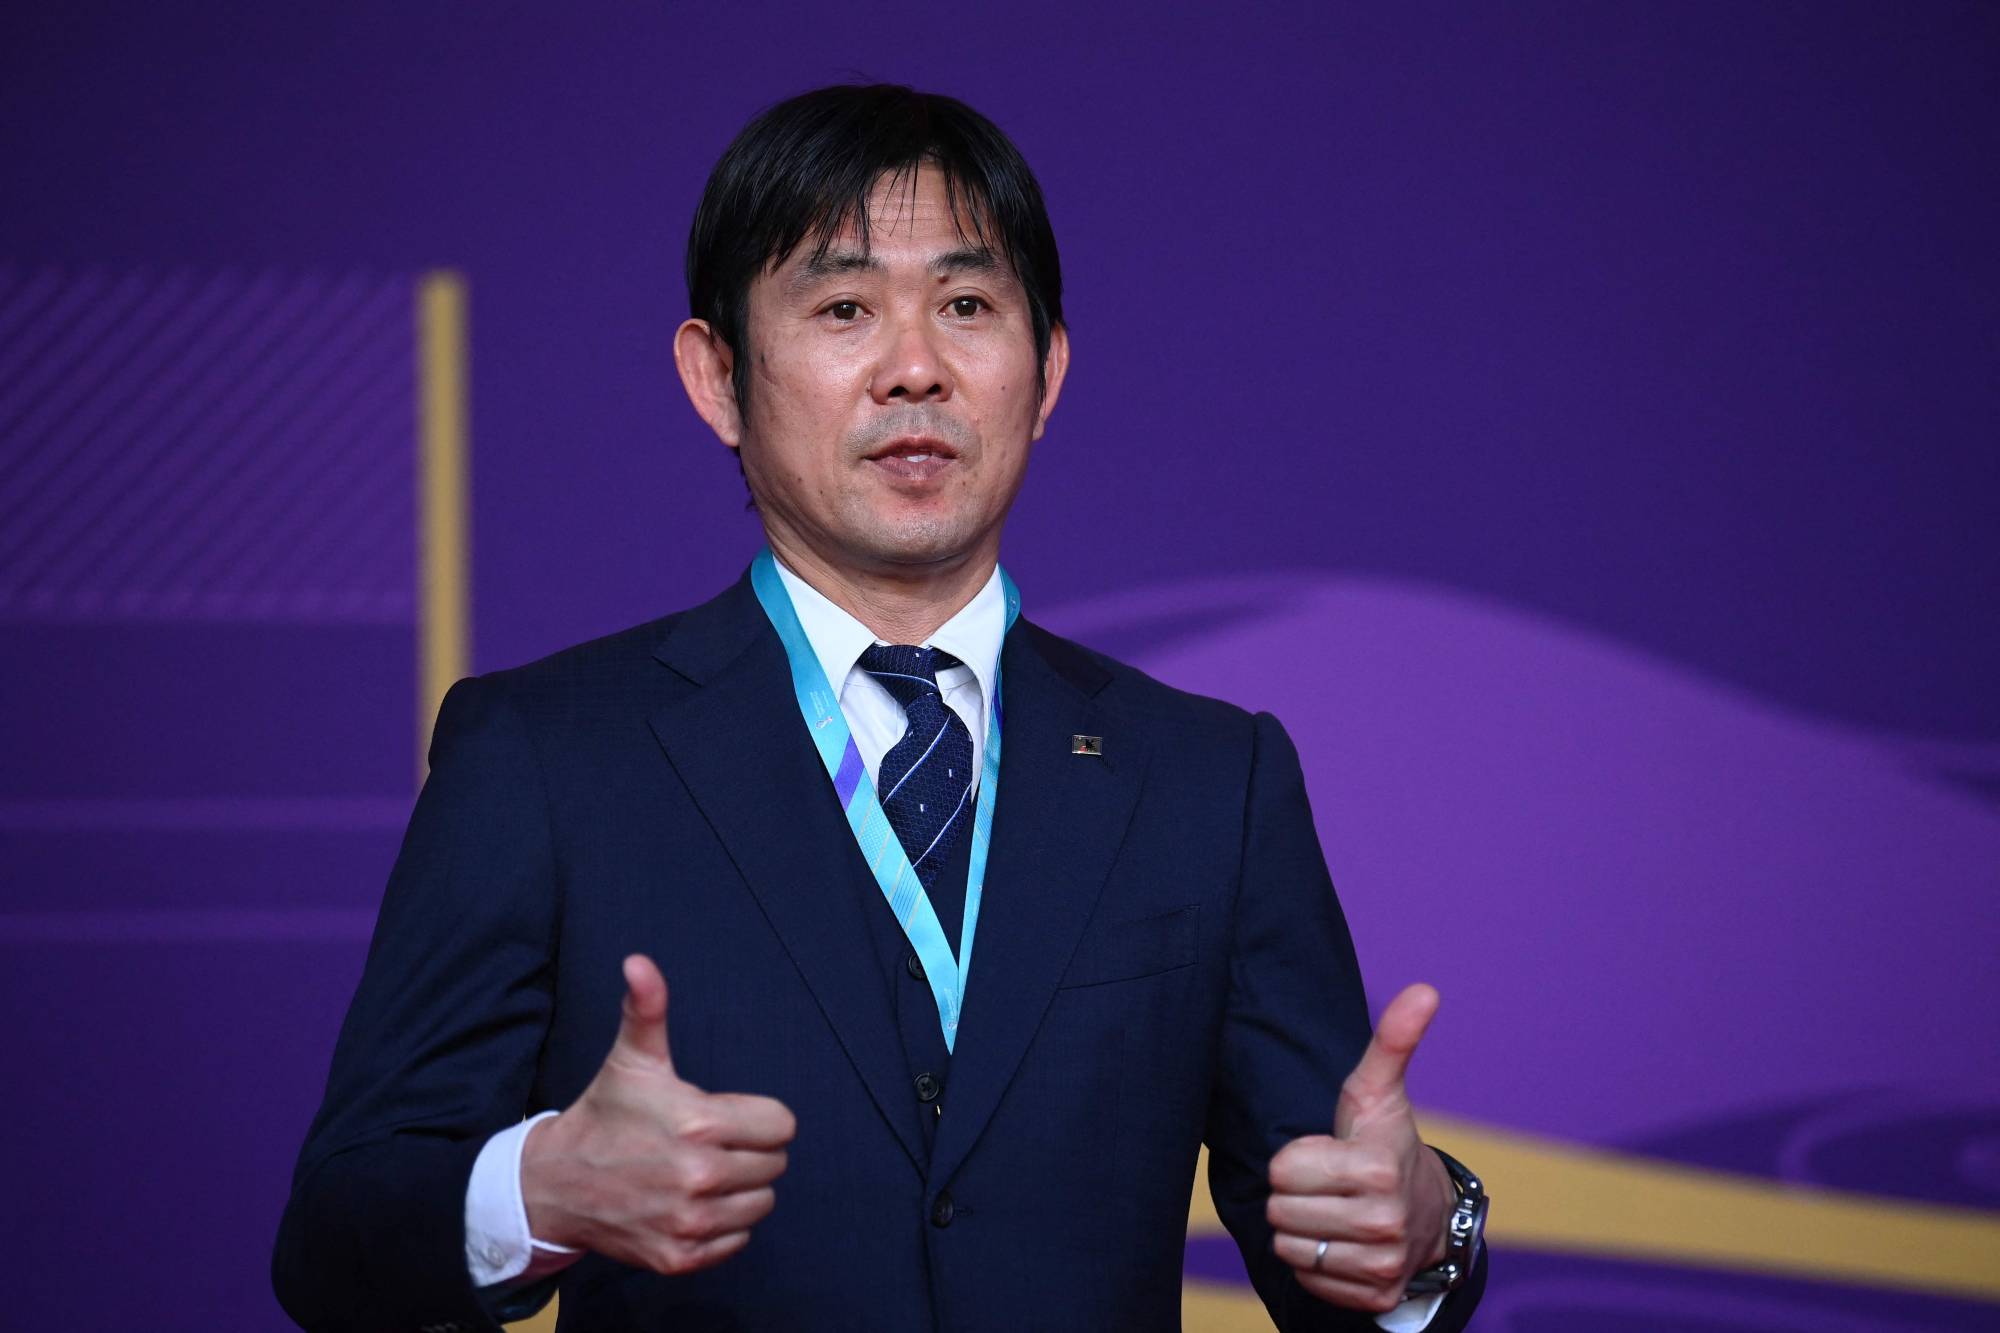 FIFA World Cup: Japan coach Moriyasu praises the current team's "individual talent"